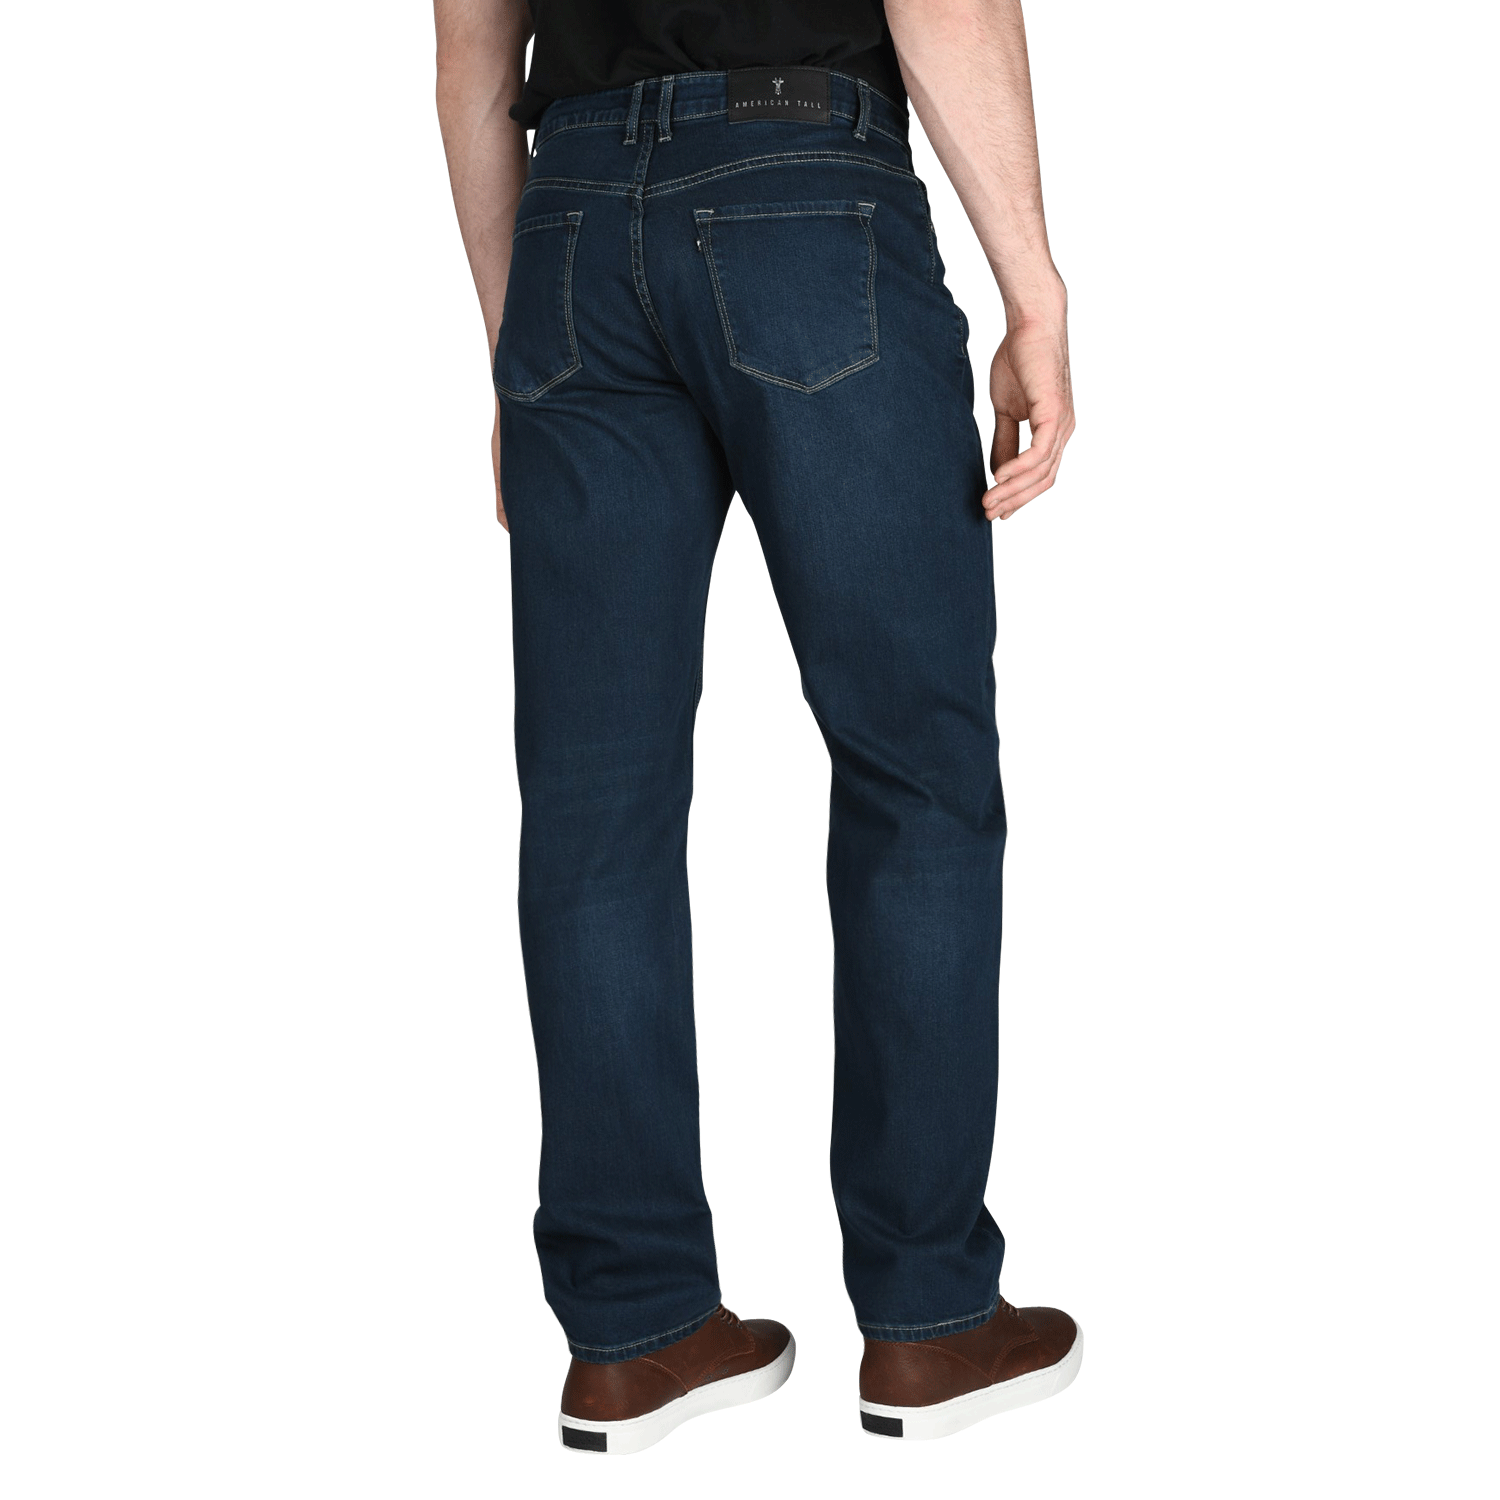 Mason SEMI-RELAXED Men's Tall Jeans in Blue Steel